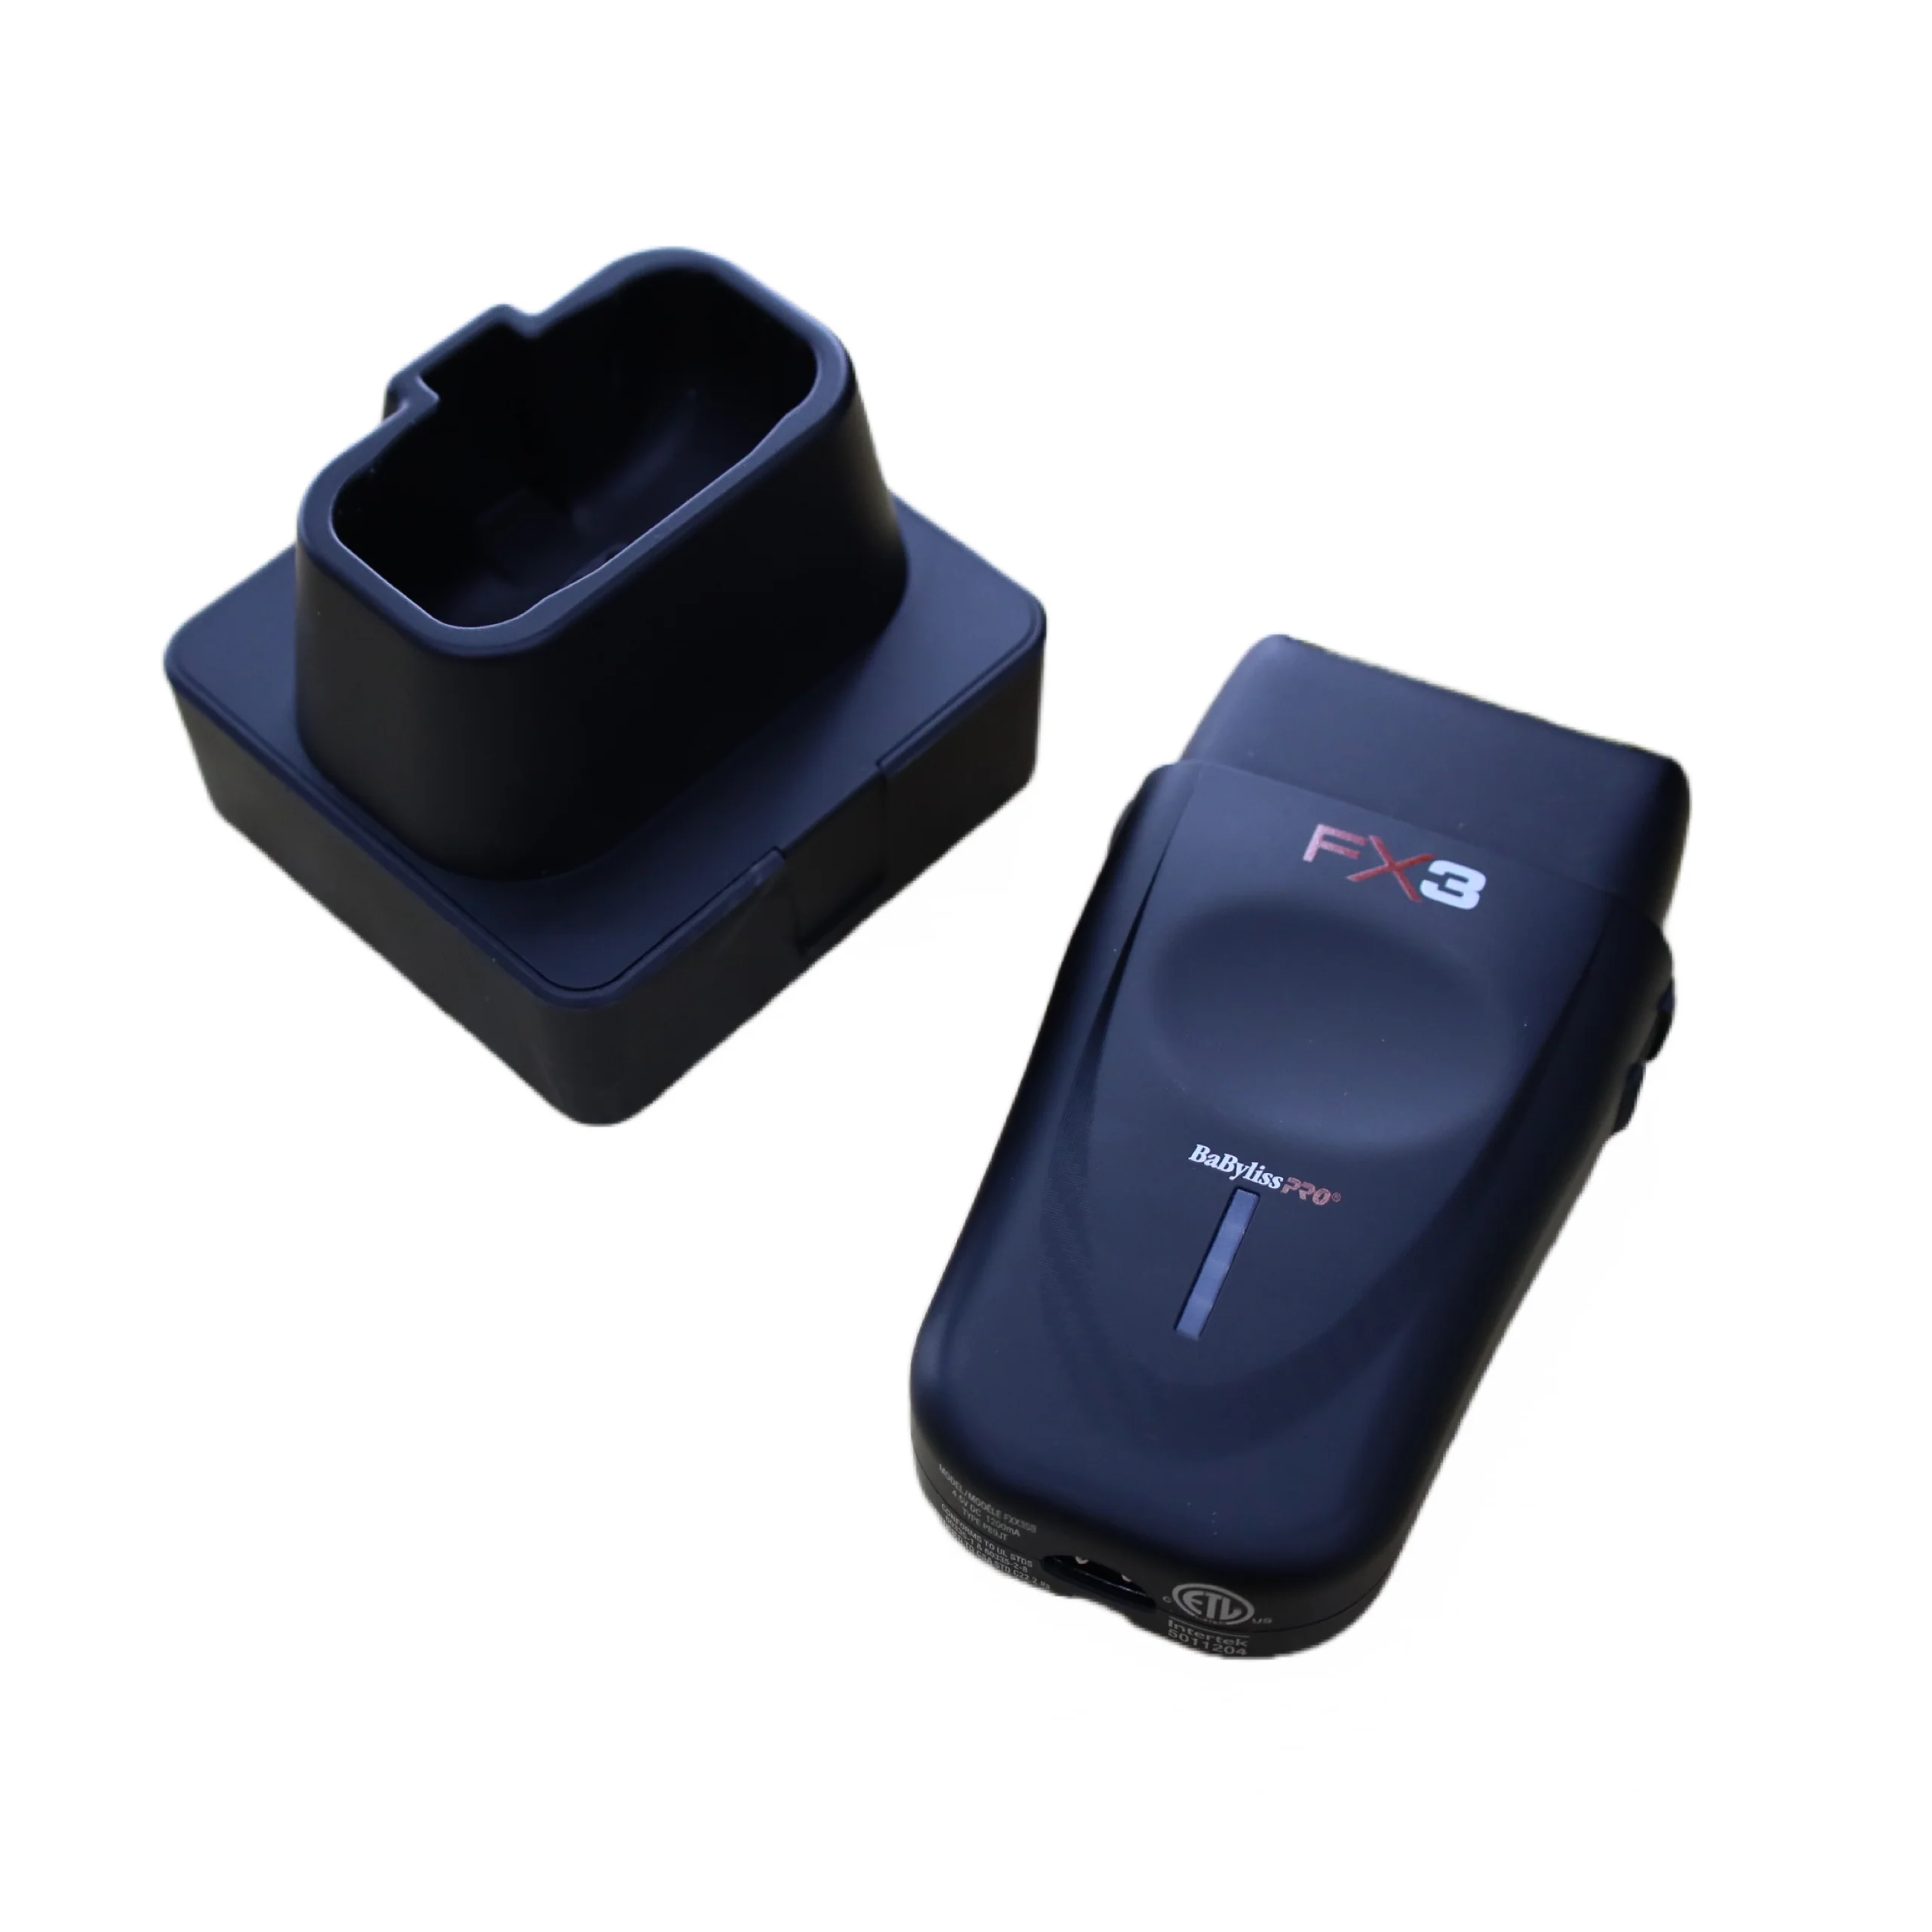 Tomb45® PowerPod, Wireless Charging Pod for Babyliss® FoilFx02 Shaver – Tomb  45